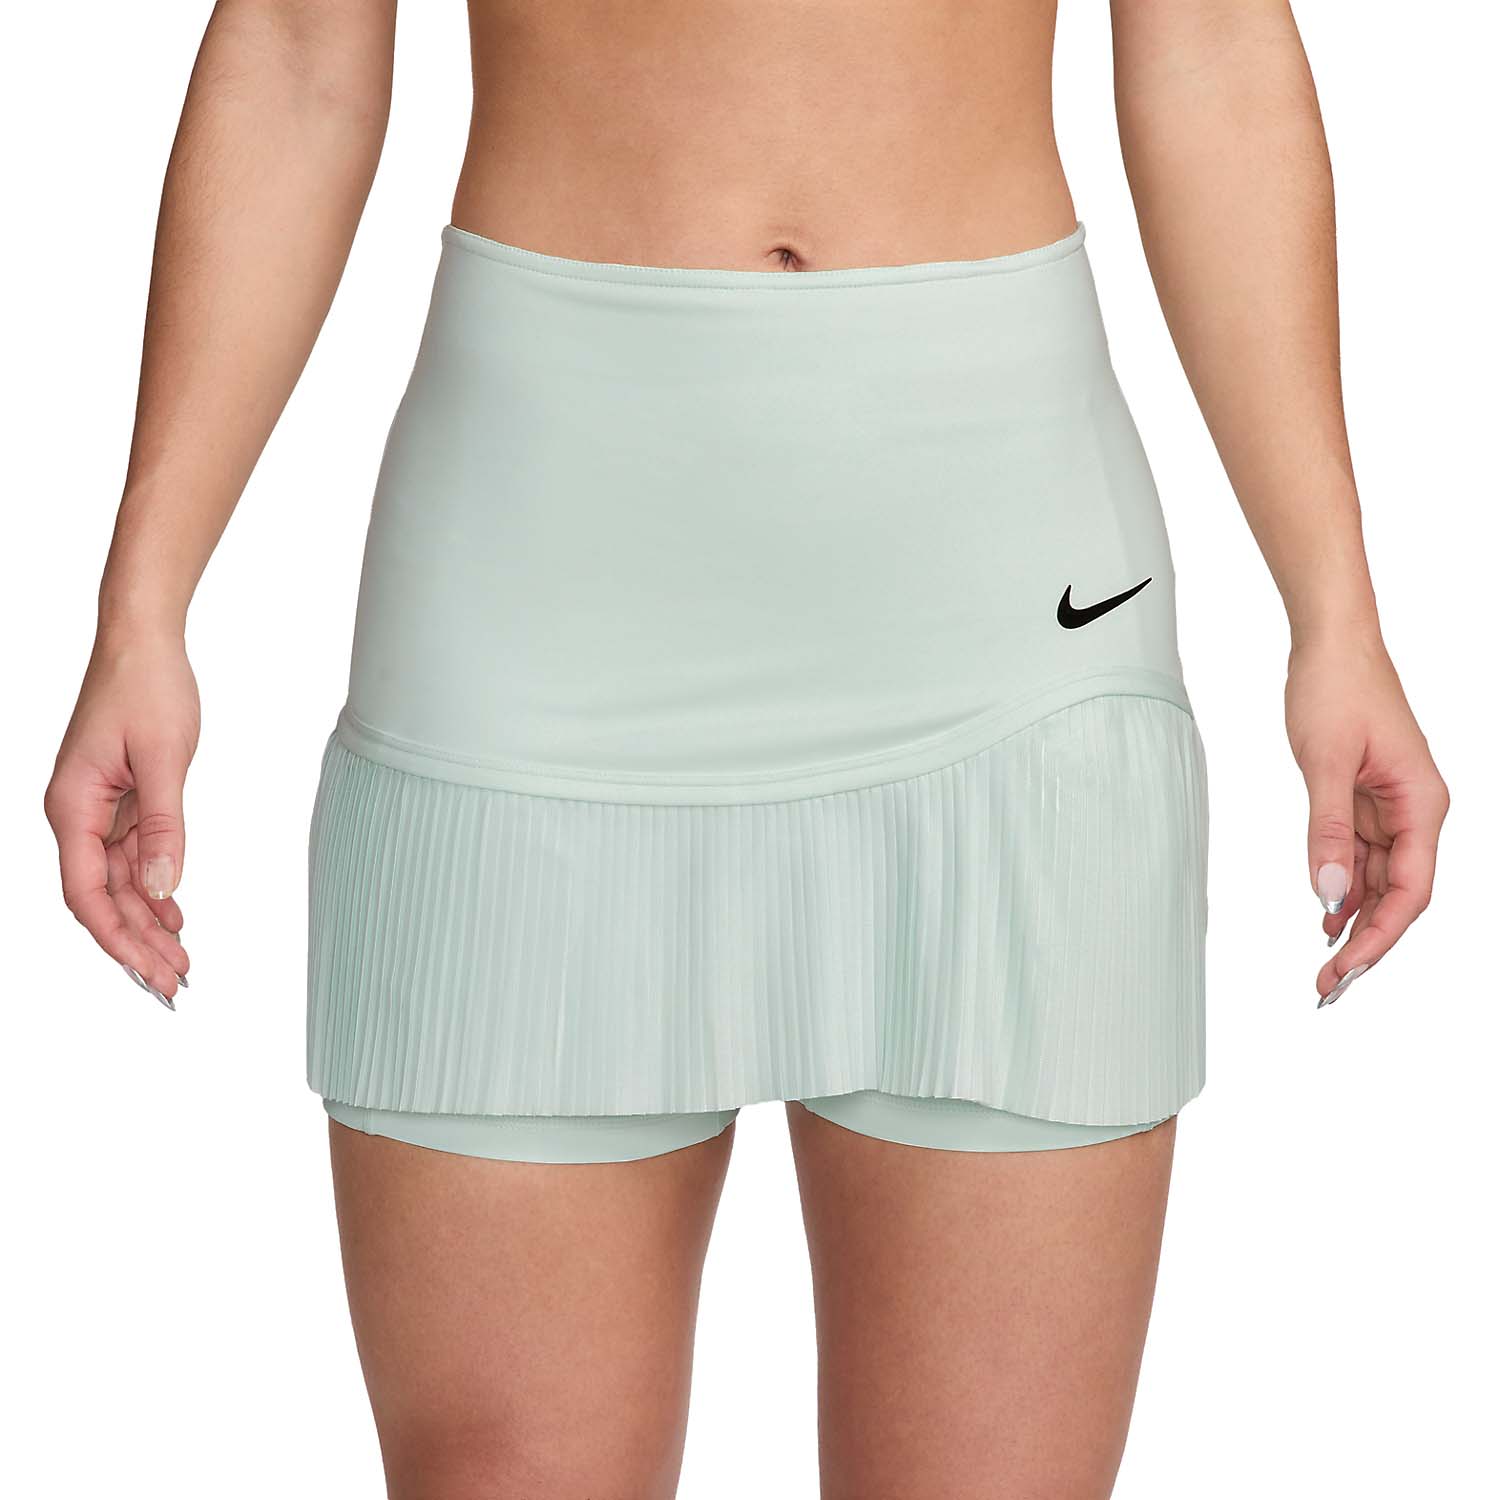 Nike Advantage Skirt - Barely Green/Black